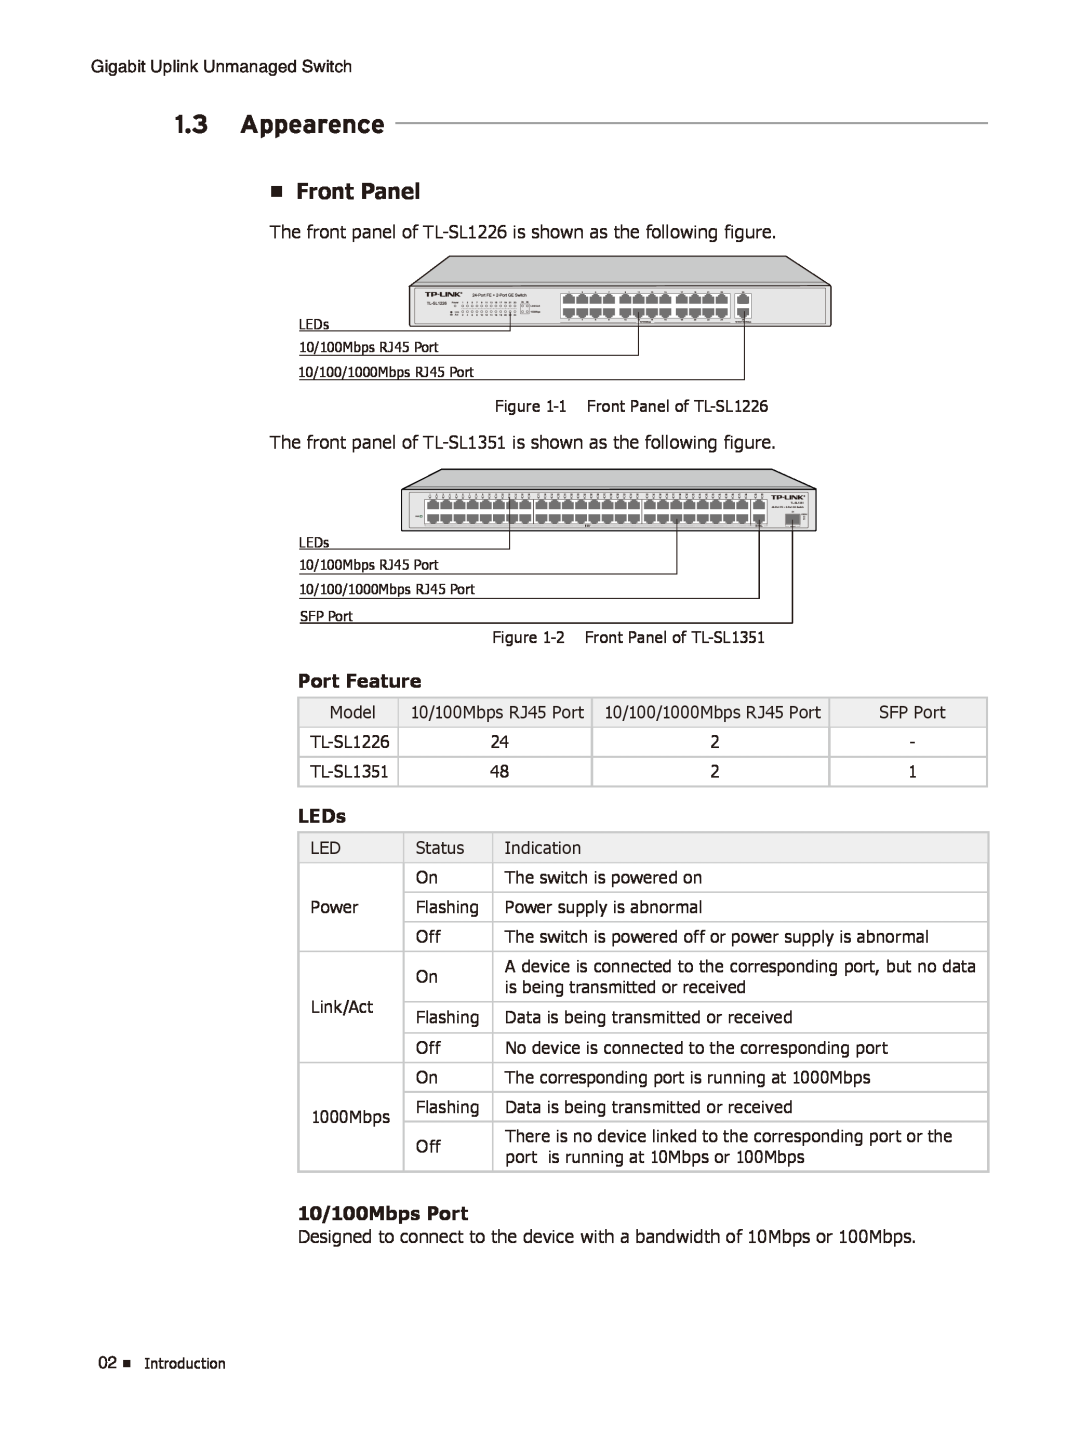 TP-Link TL-SL1226/TL-SL1351 manual Appearence, Front Panel, Port Feature, LEDs, 10/100Mbps Port 